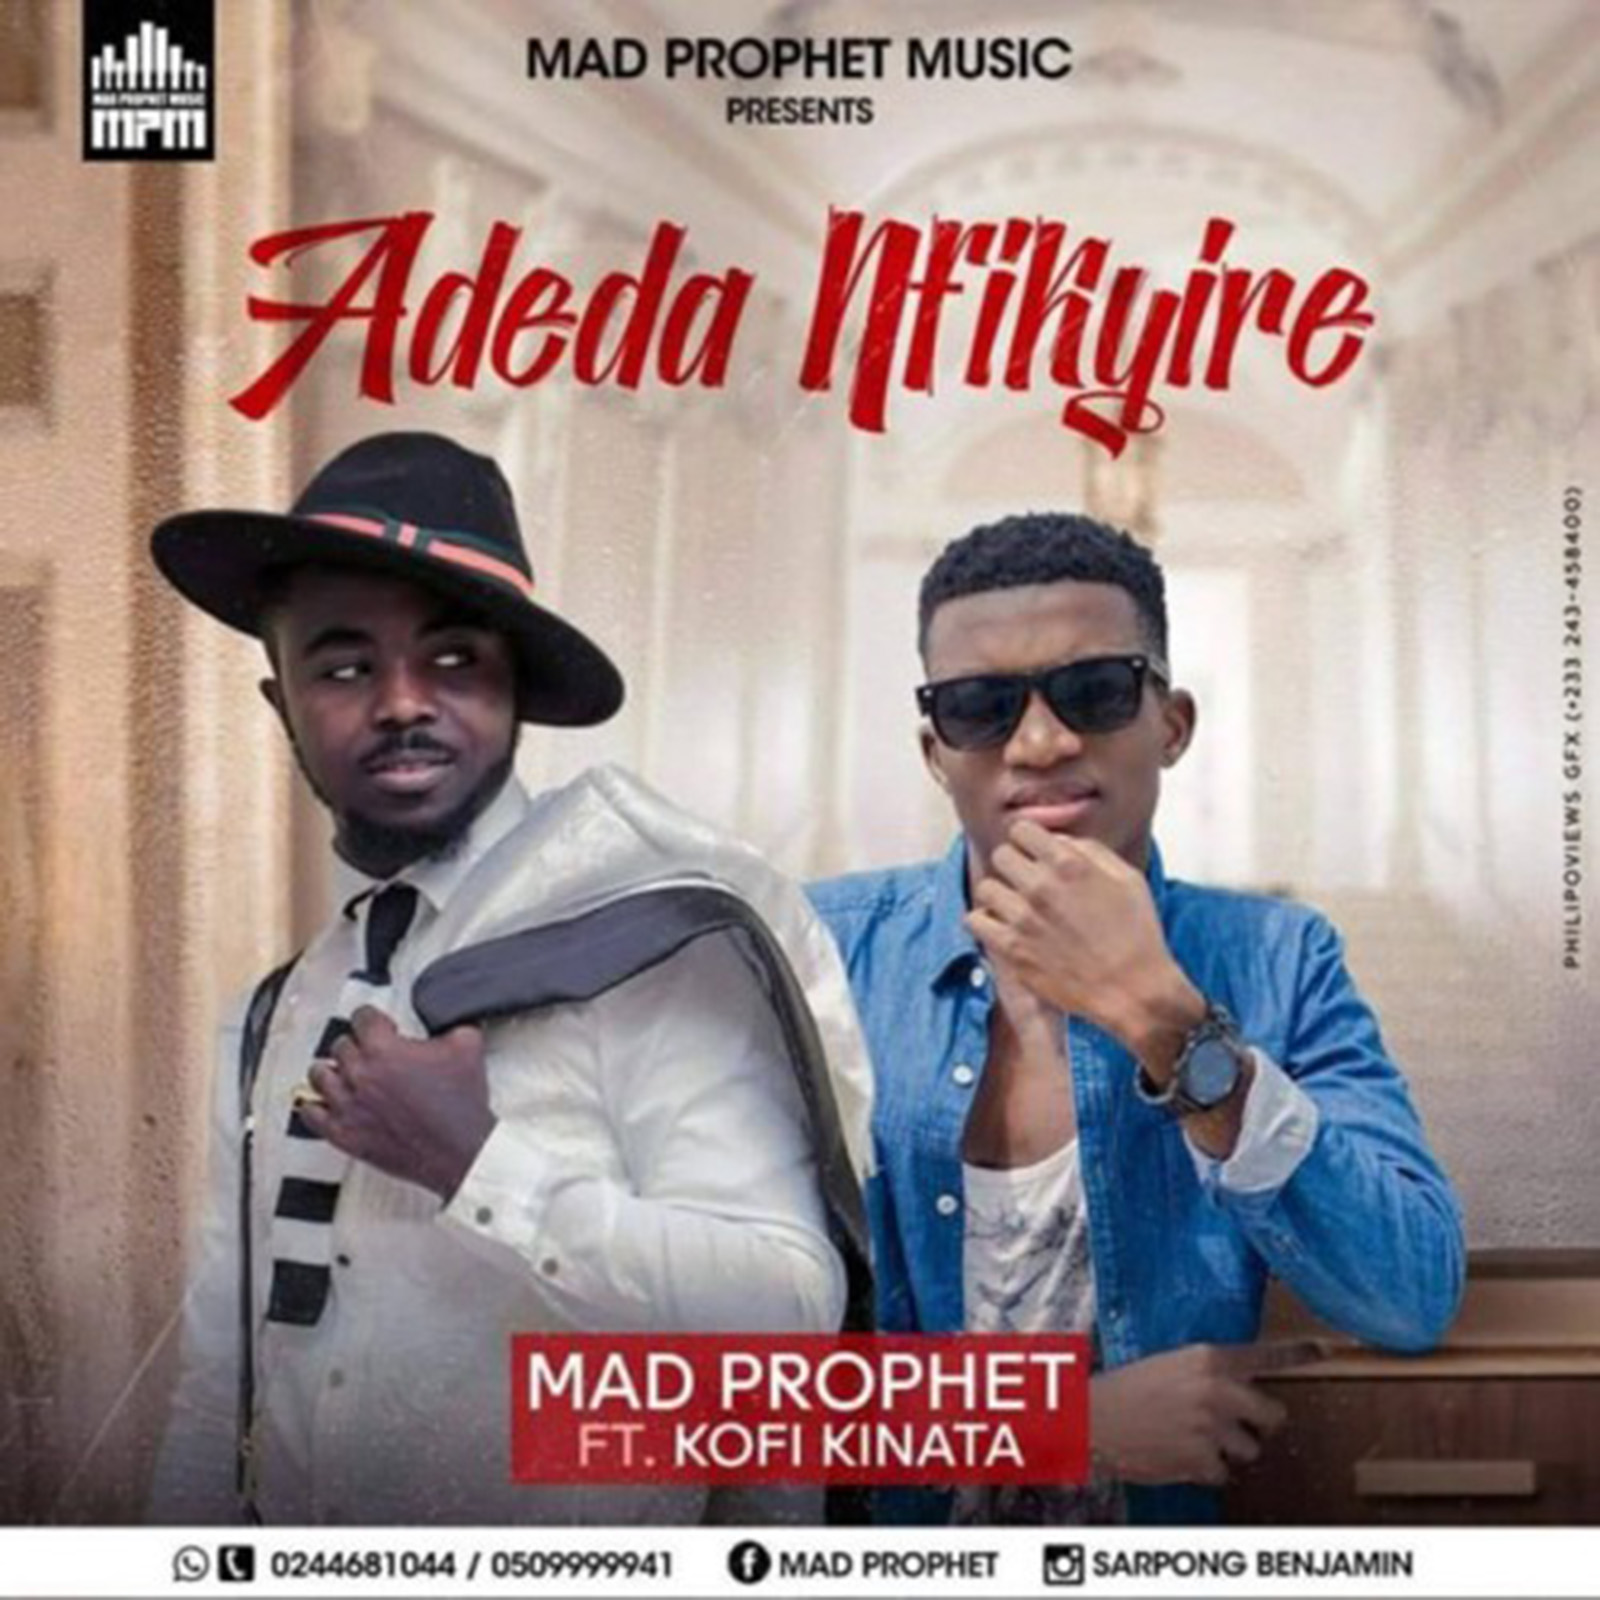 Adeda Nfikyire by Mad Prophet feat. Kofi Kinaata